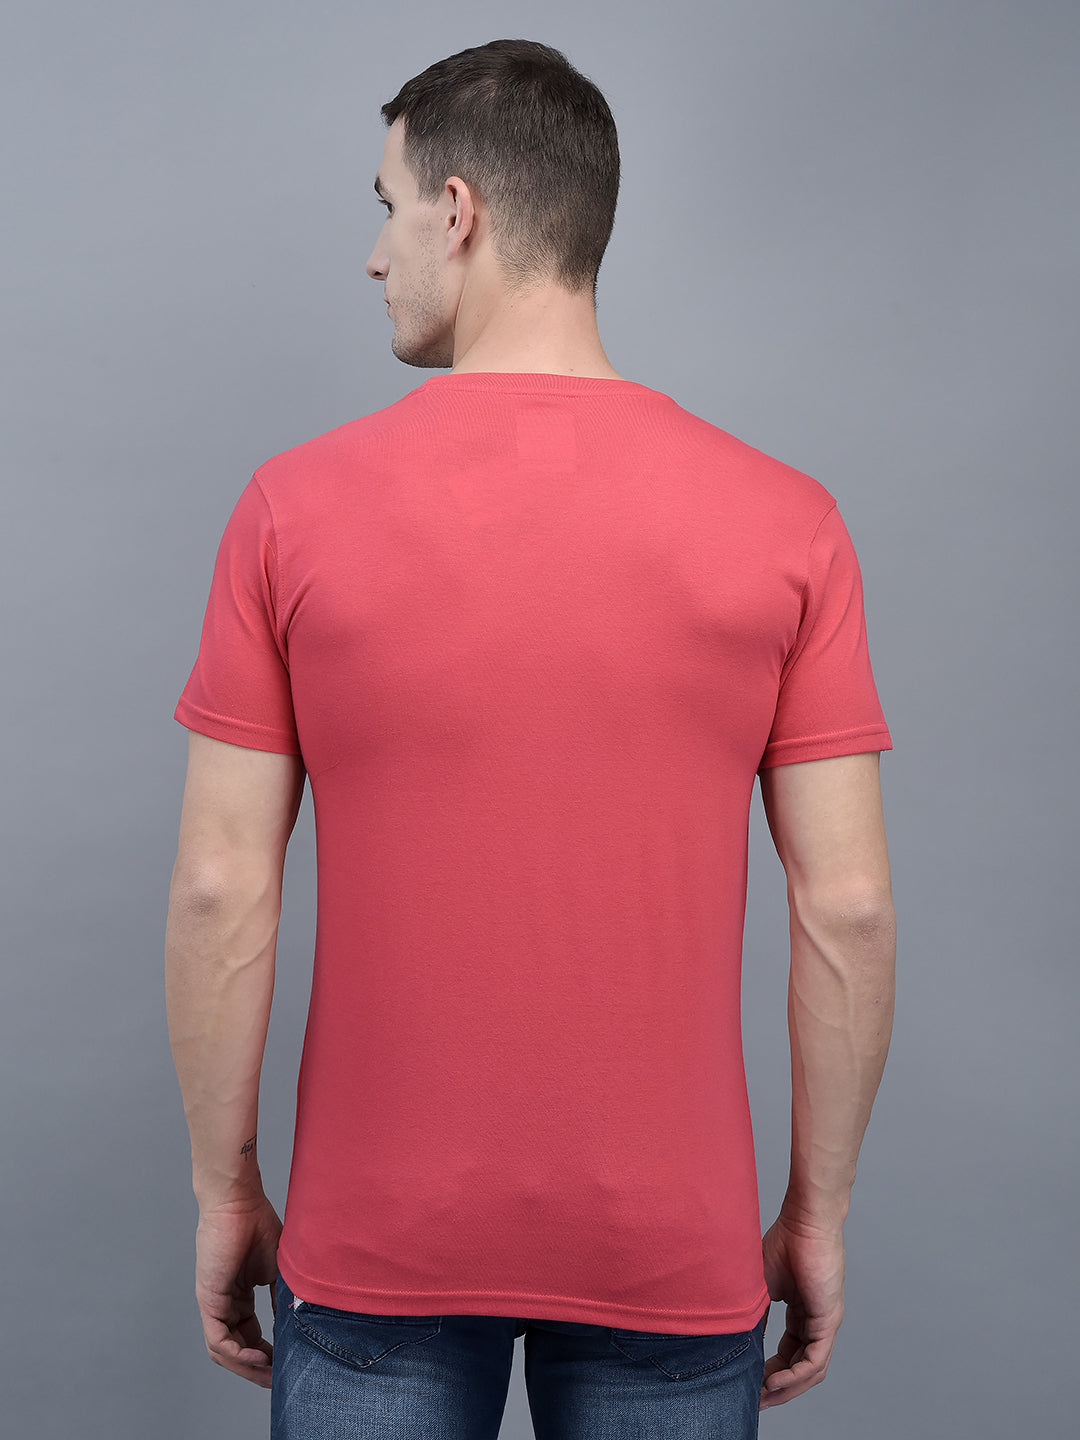 Cobb Red Printed Round Neck T-Shirt